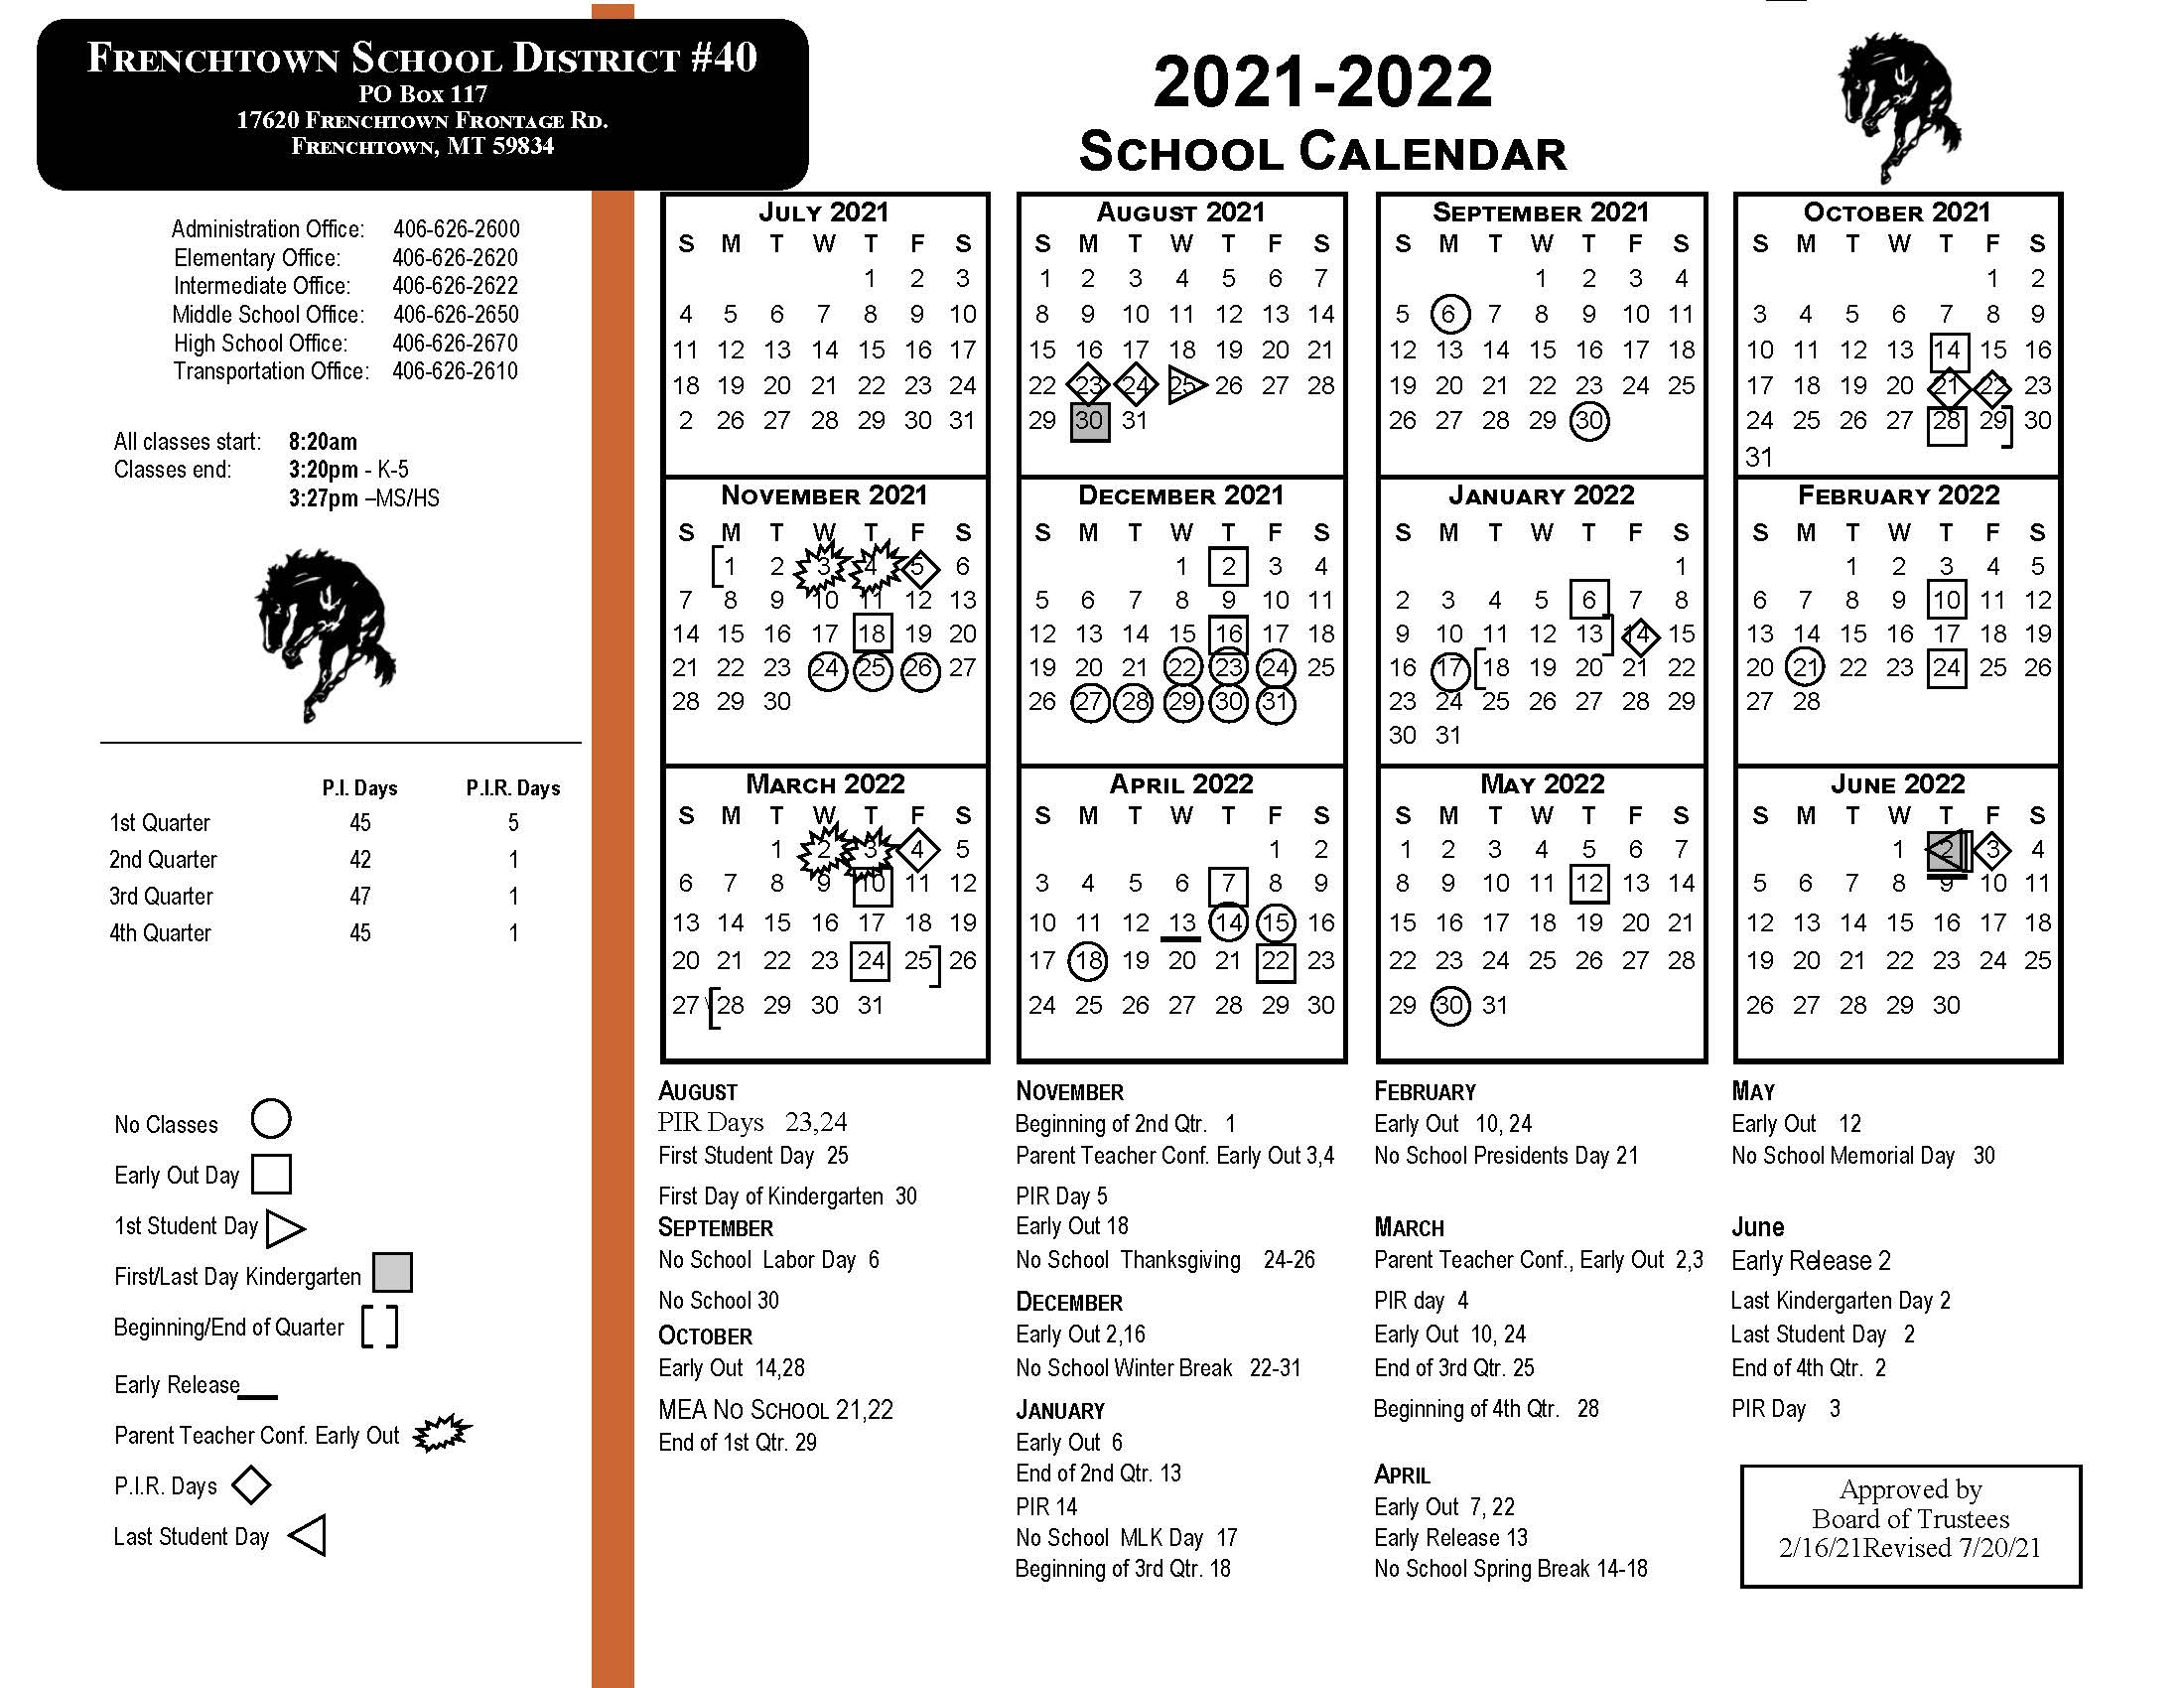 printable image of the district calendar